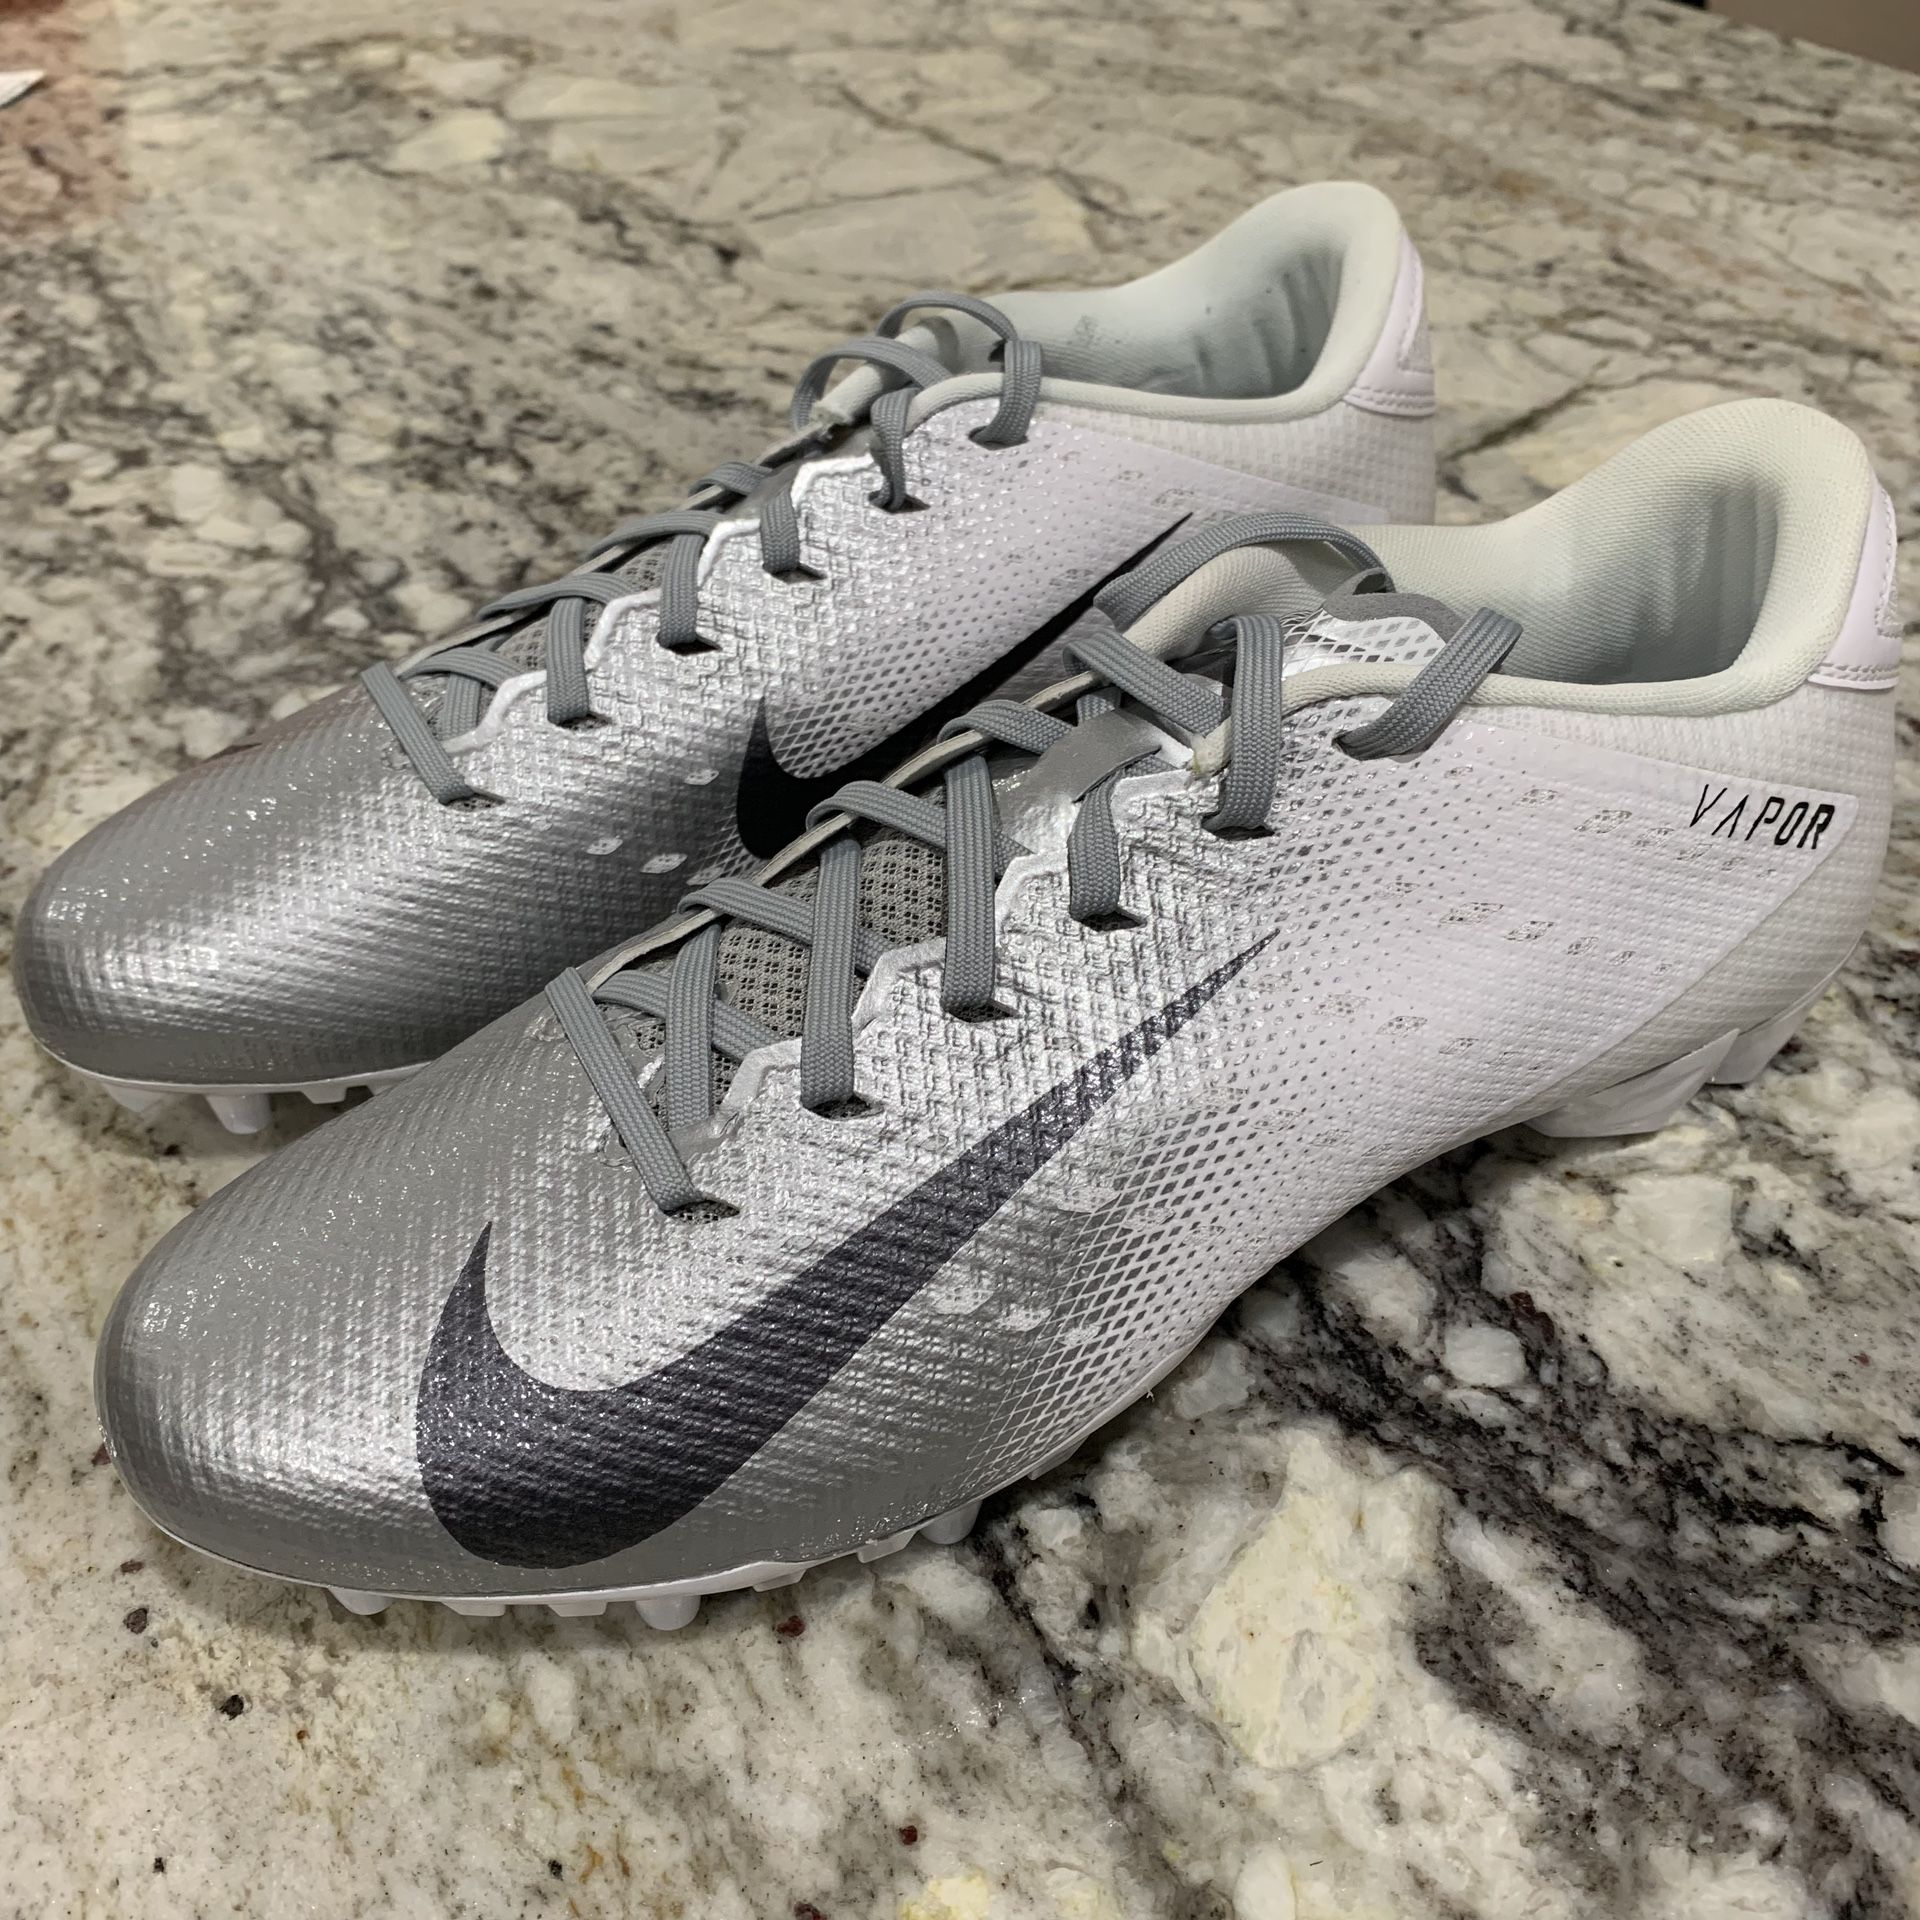 New Nike Vapor Untouchable Speed 3 TD Men’s Football Cleat 917166 101